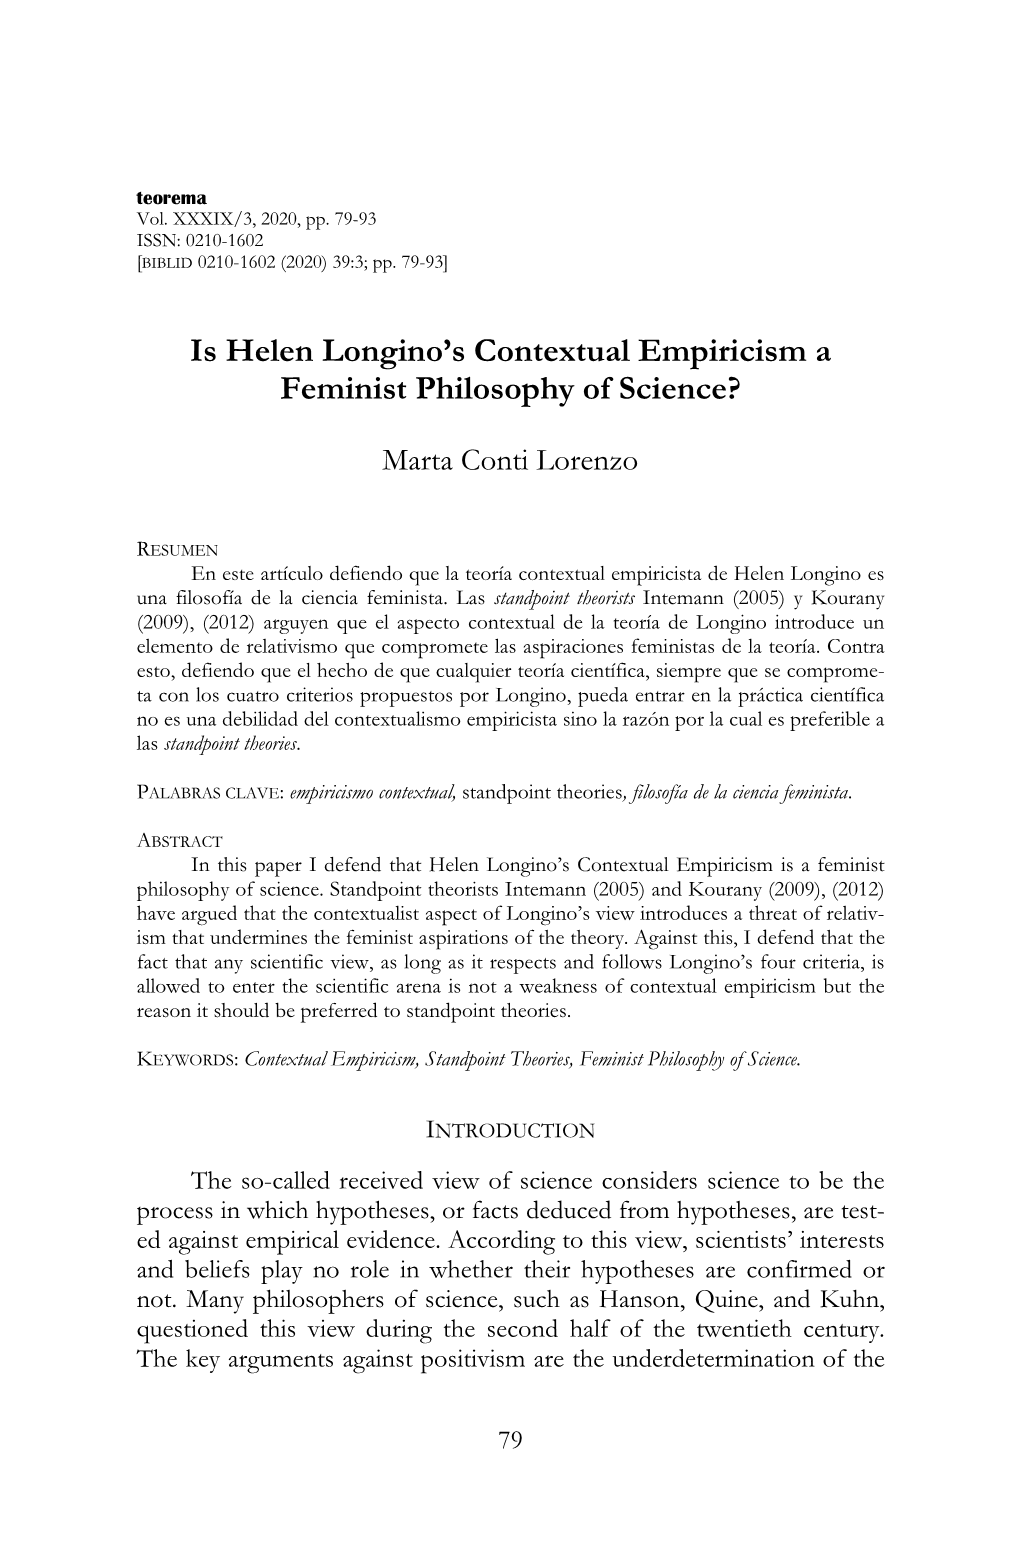 Is Helen Longino's Contextual Empiricism a Feminist Philosophy